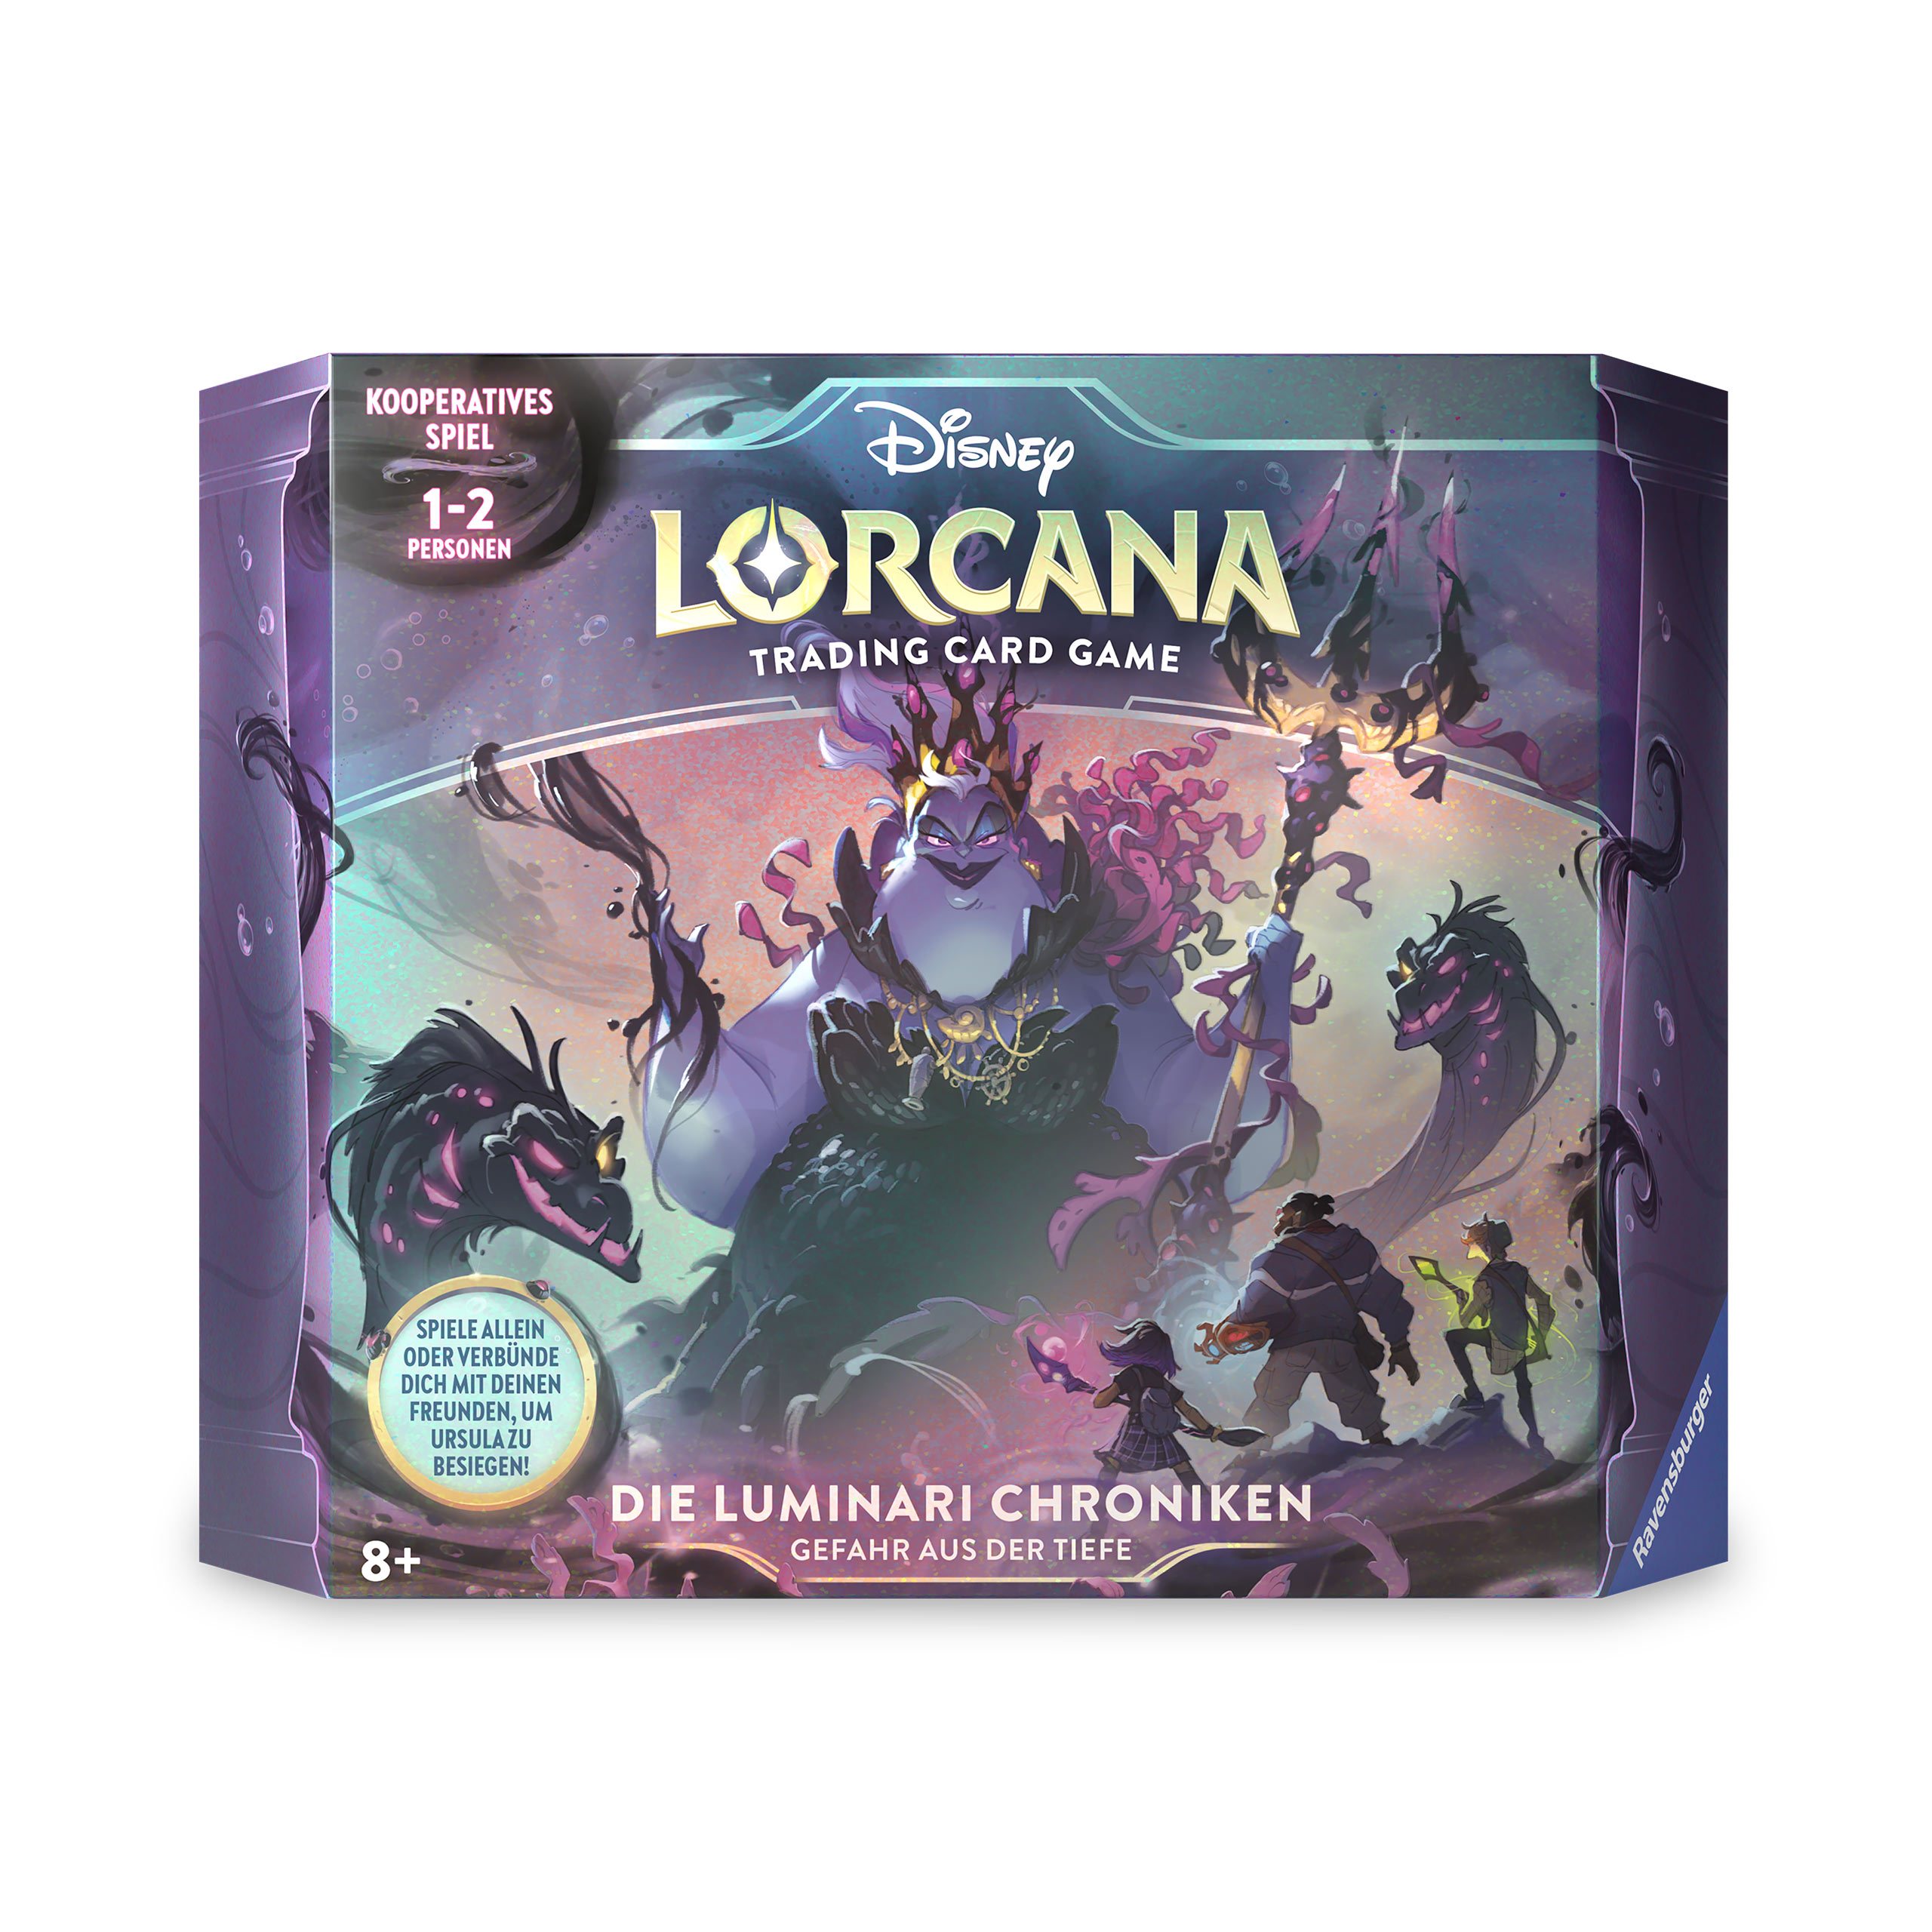 Disney Lorcana Gift Set The Luminari Chronicles - Ursula's Return Trading Card Game